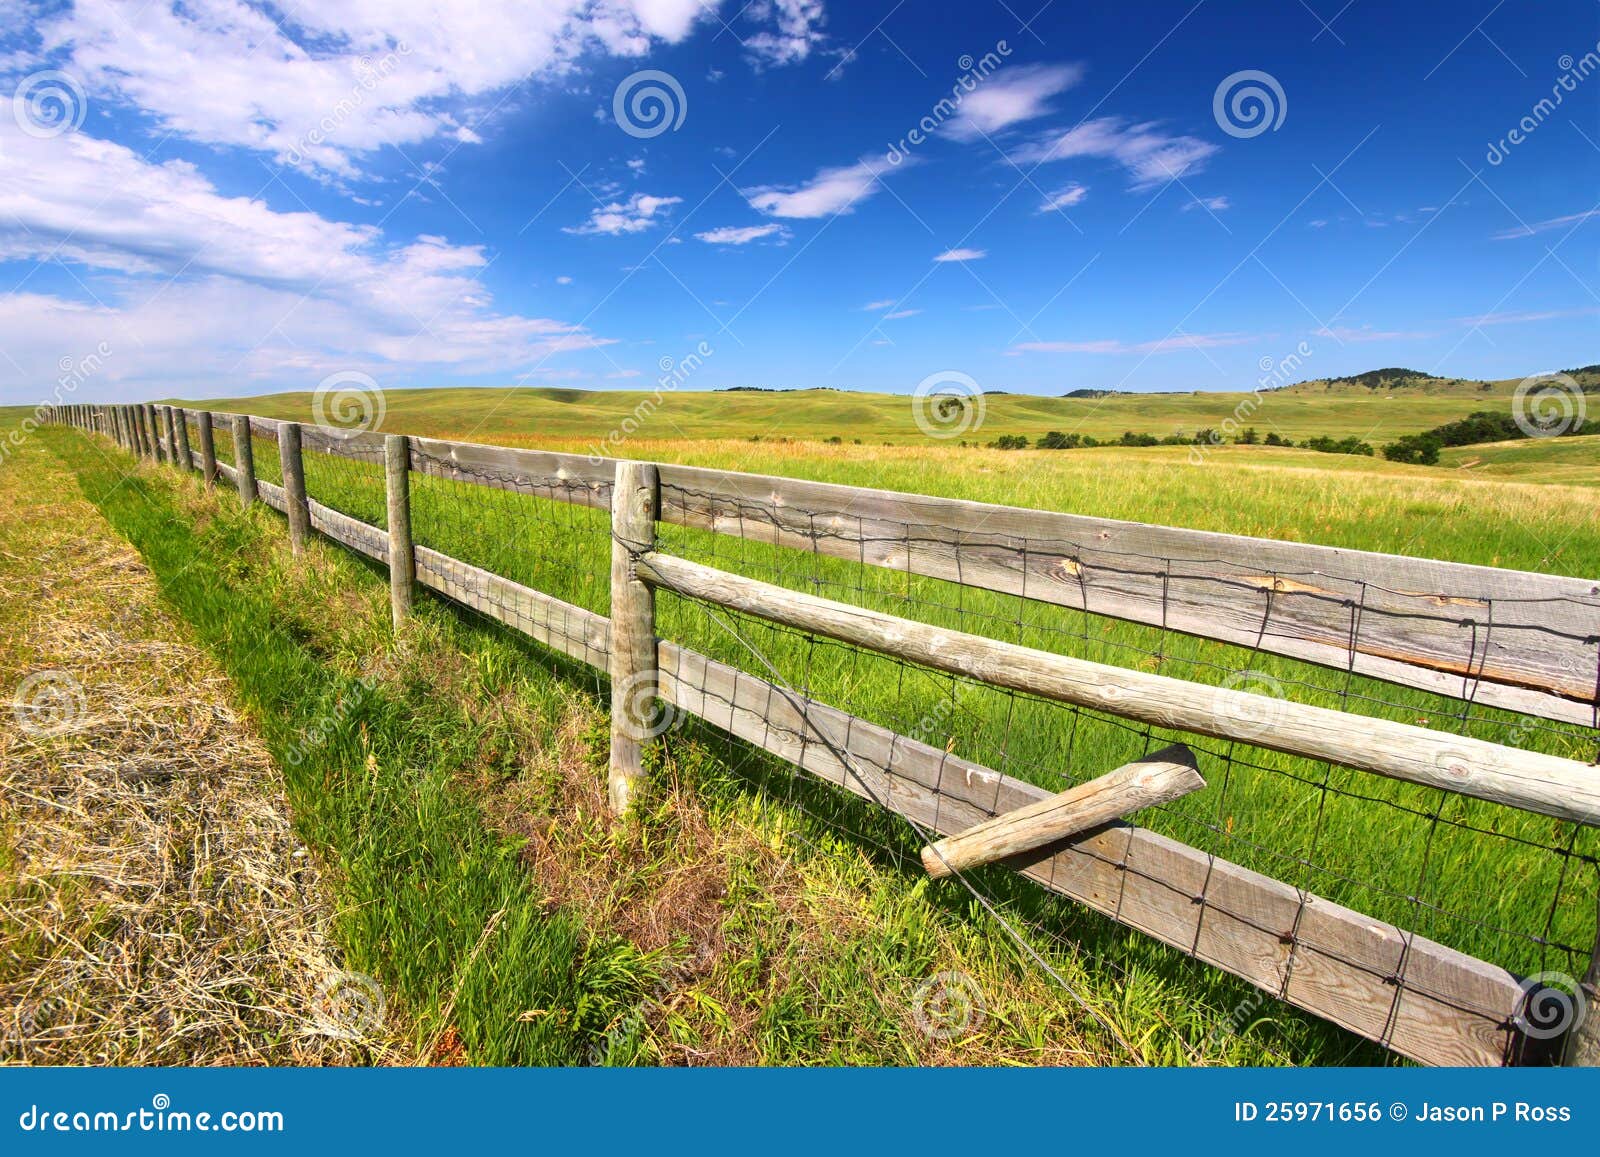 prairie fenceline south dakota